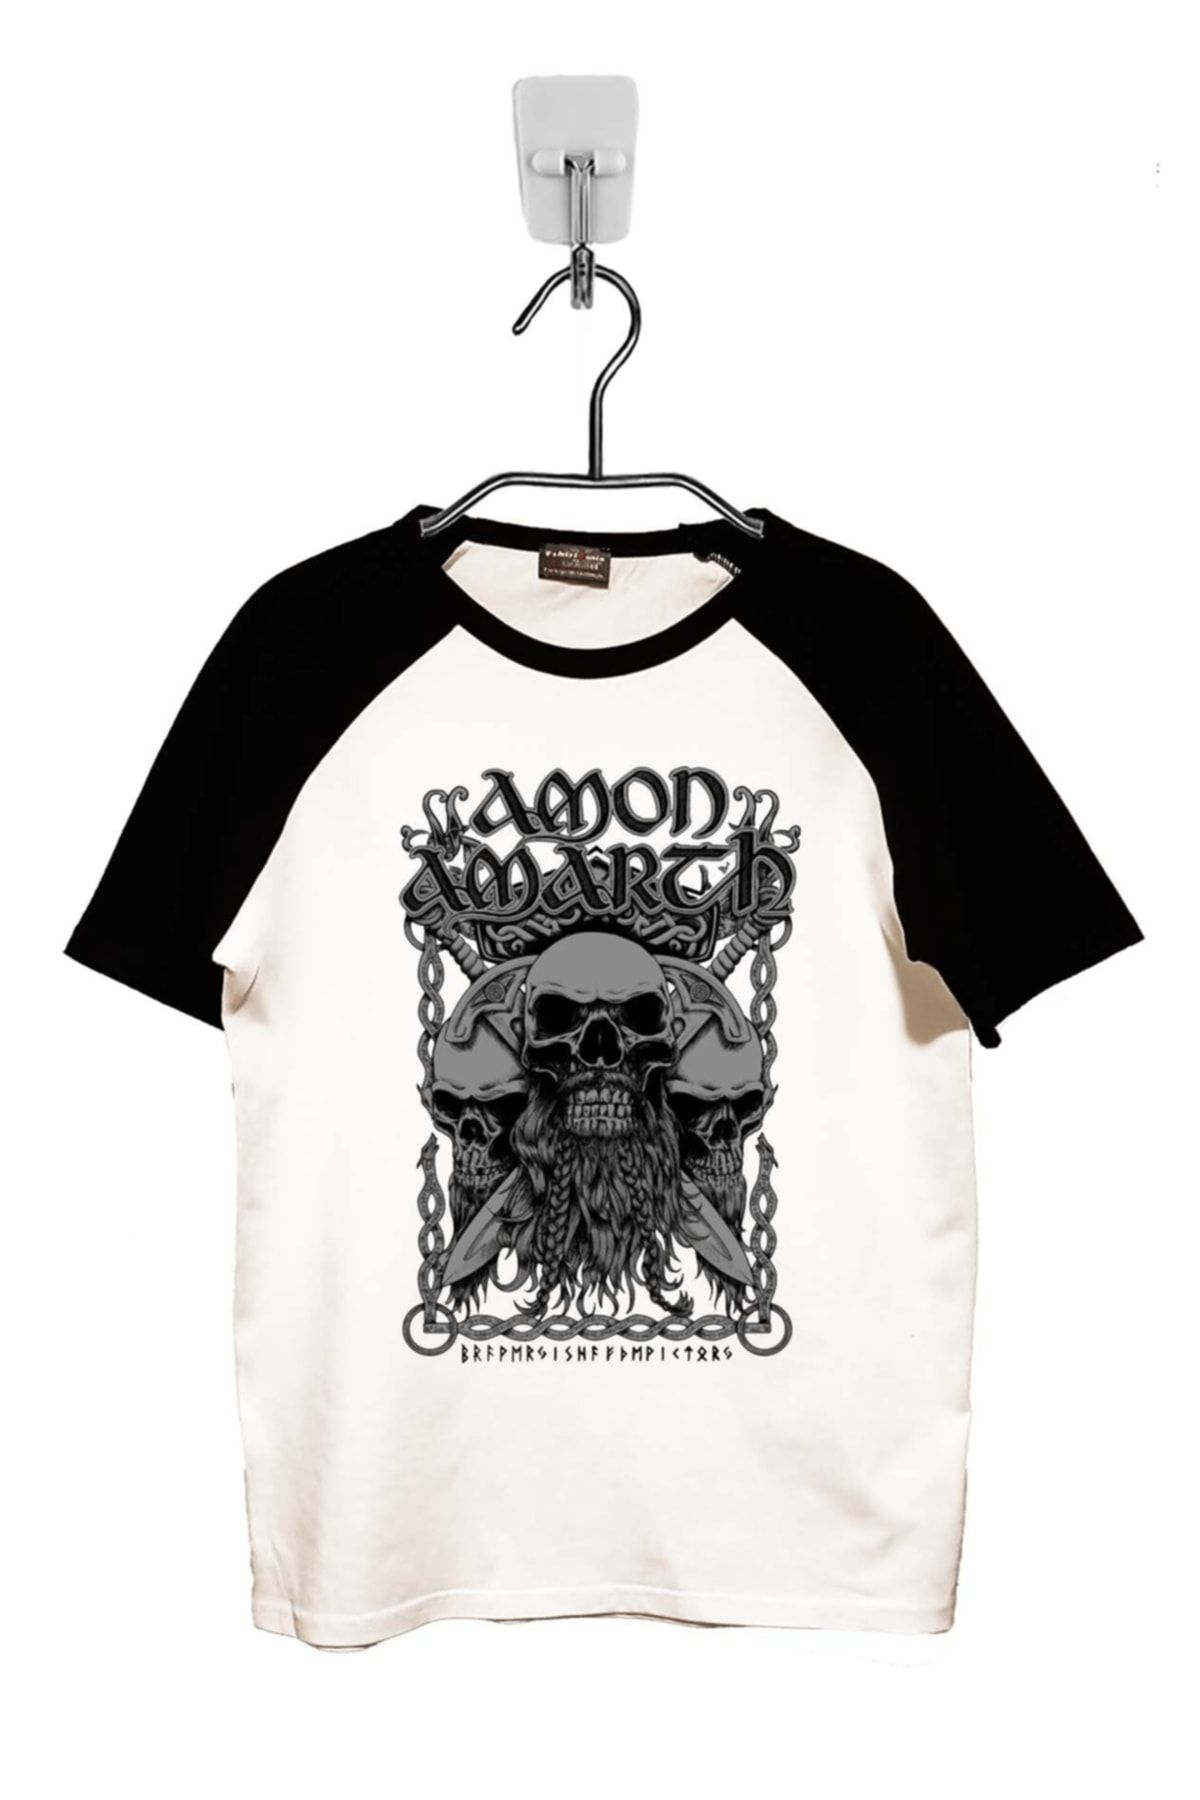 Tişört Mania Amon Amarth Reglan T-shirt